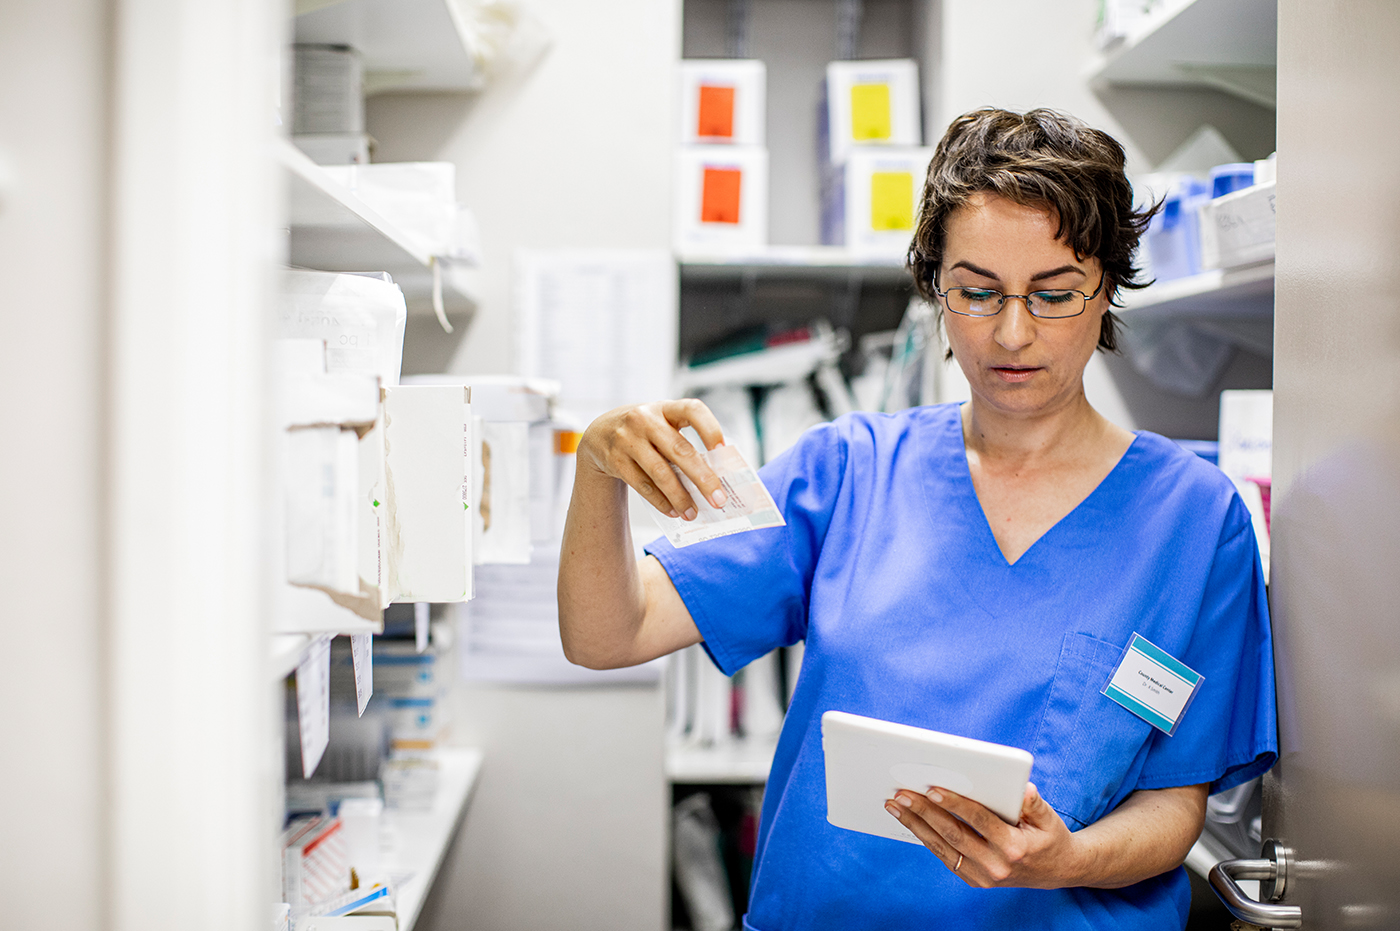 A Healthcare worker finding a prescription 